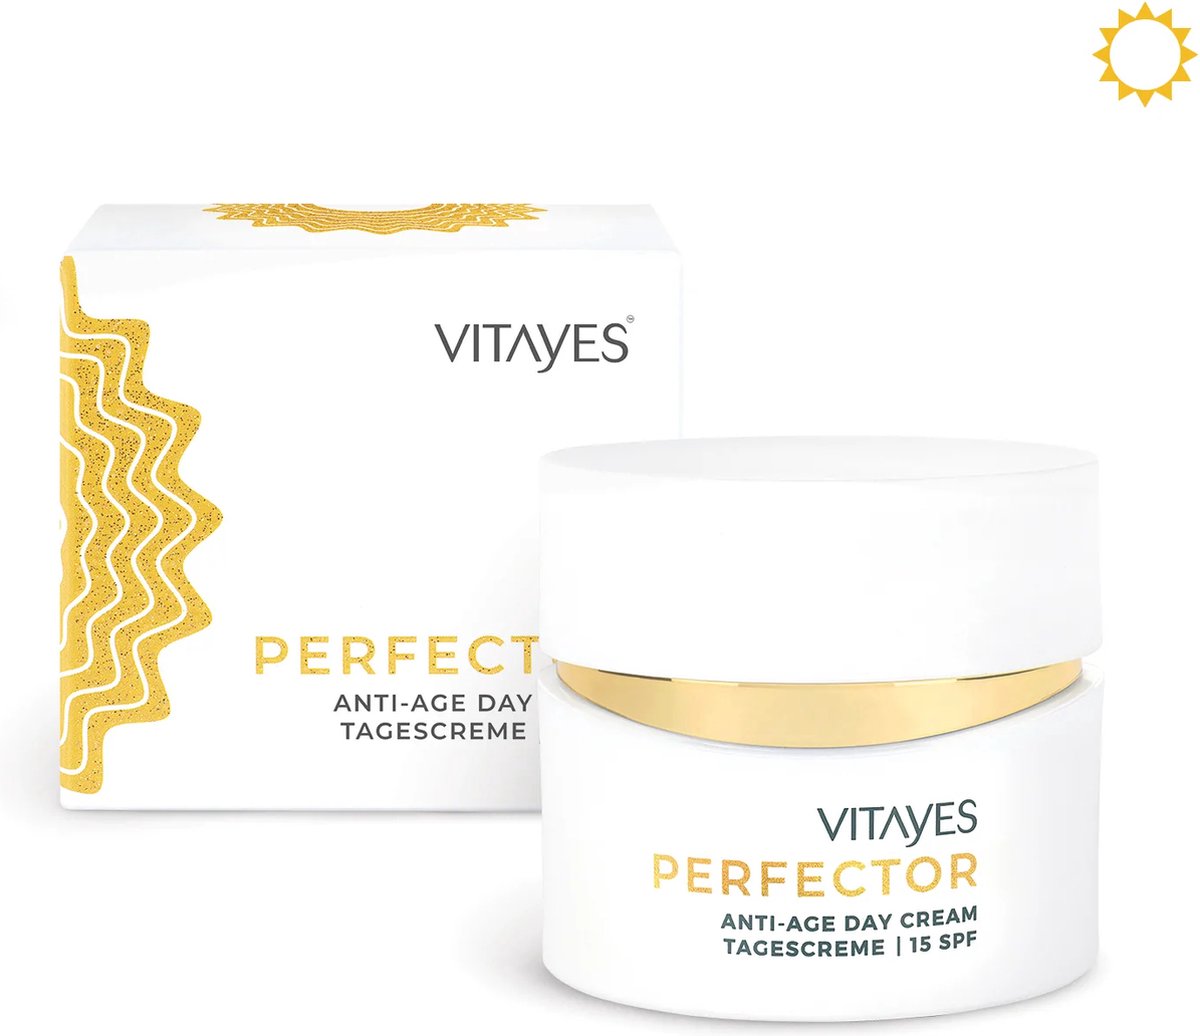 Vitayes PERFECTOR Anti-Age Dagcrème - anti age gezichtscrème, 24-uurs hydratatie voor de huid met SPF15 | 50ml